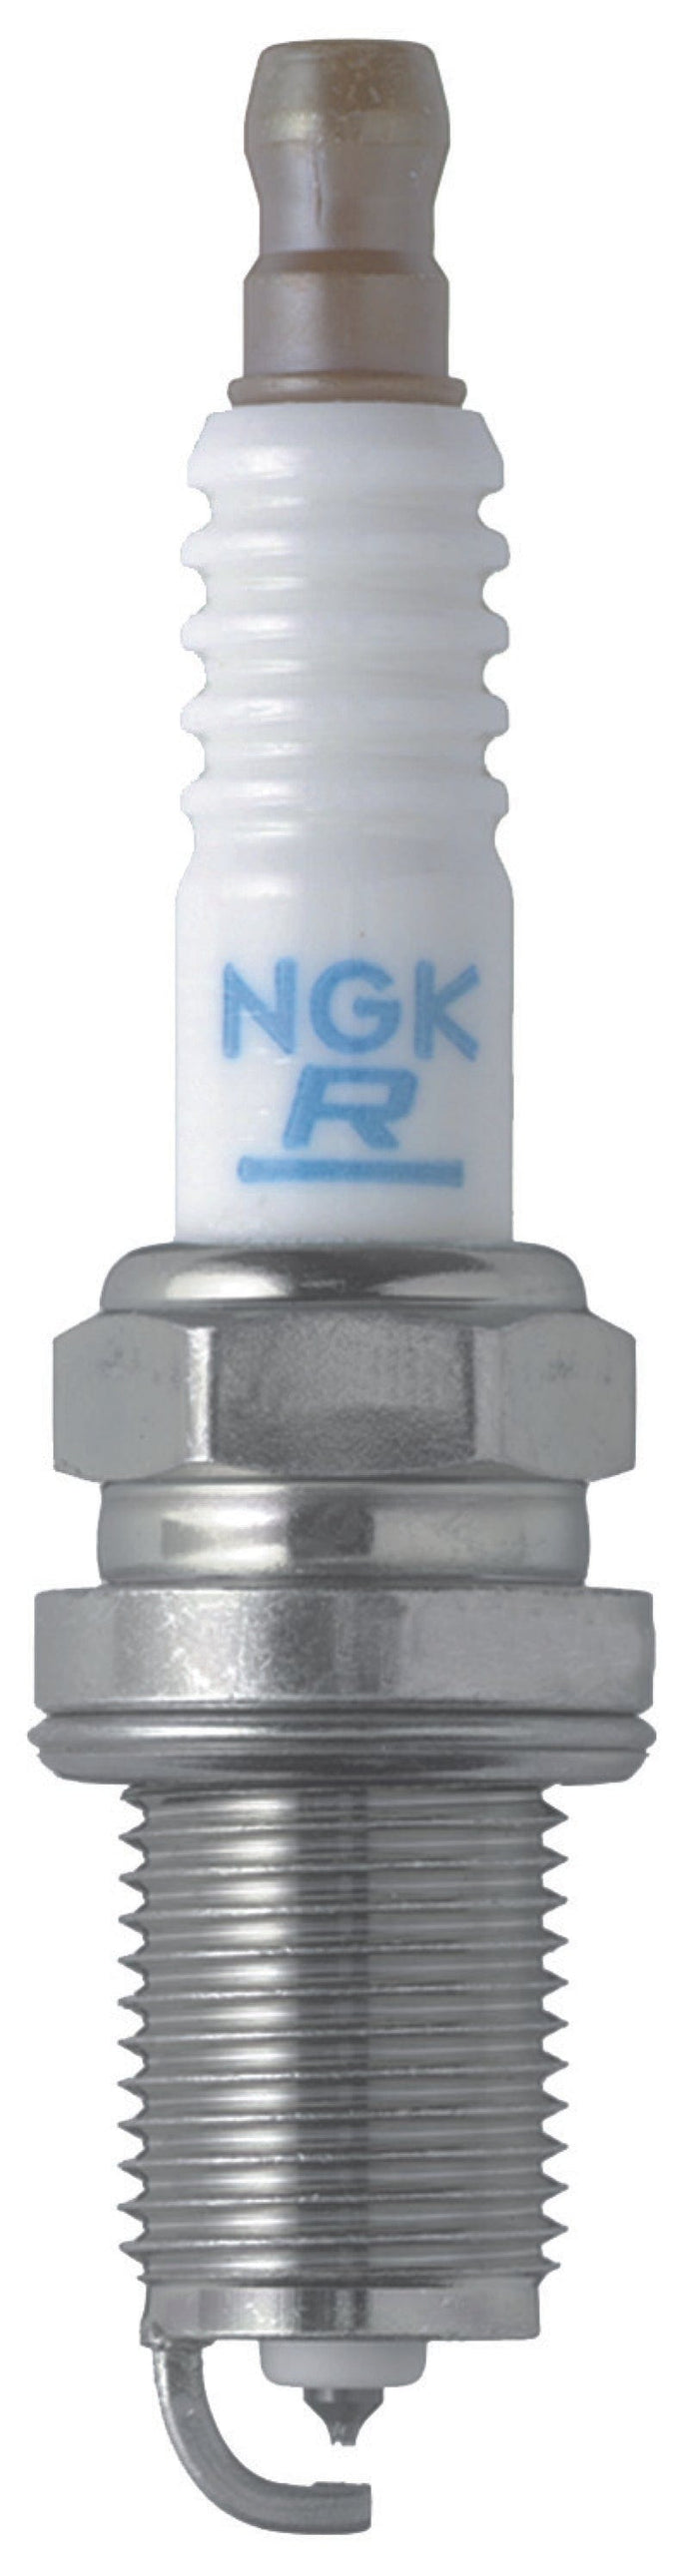 NGK NGK3546